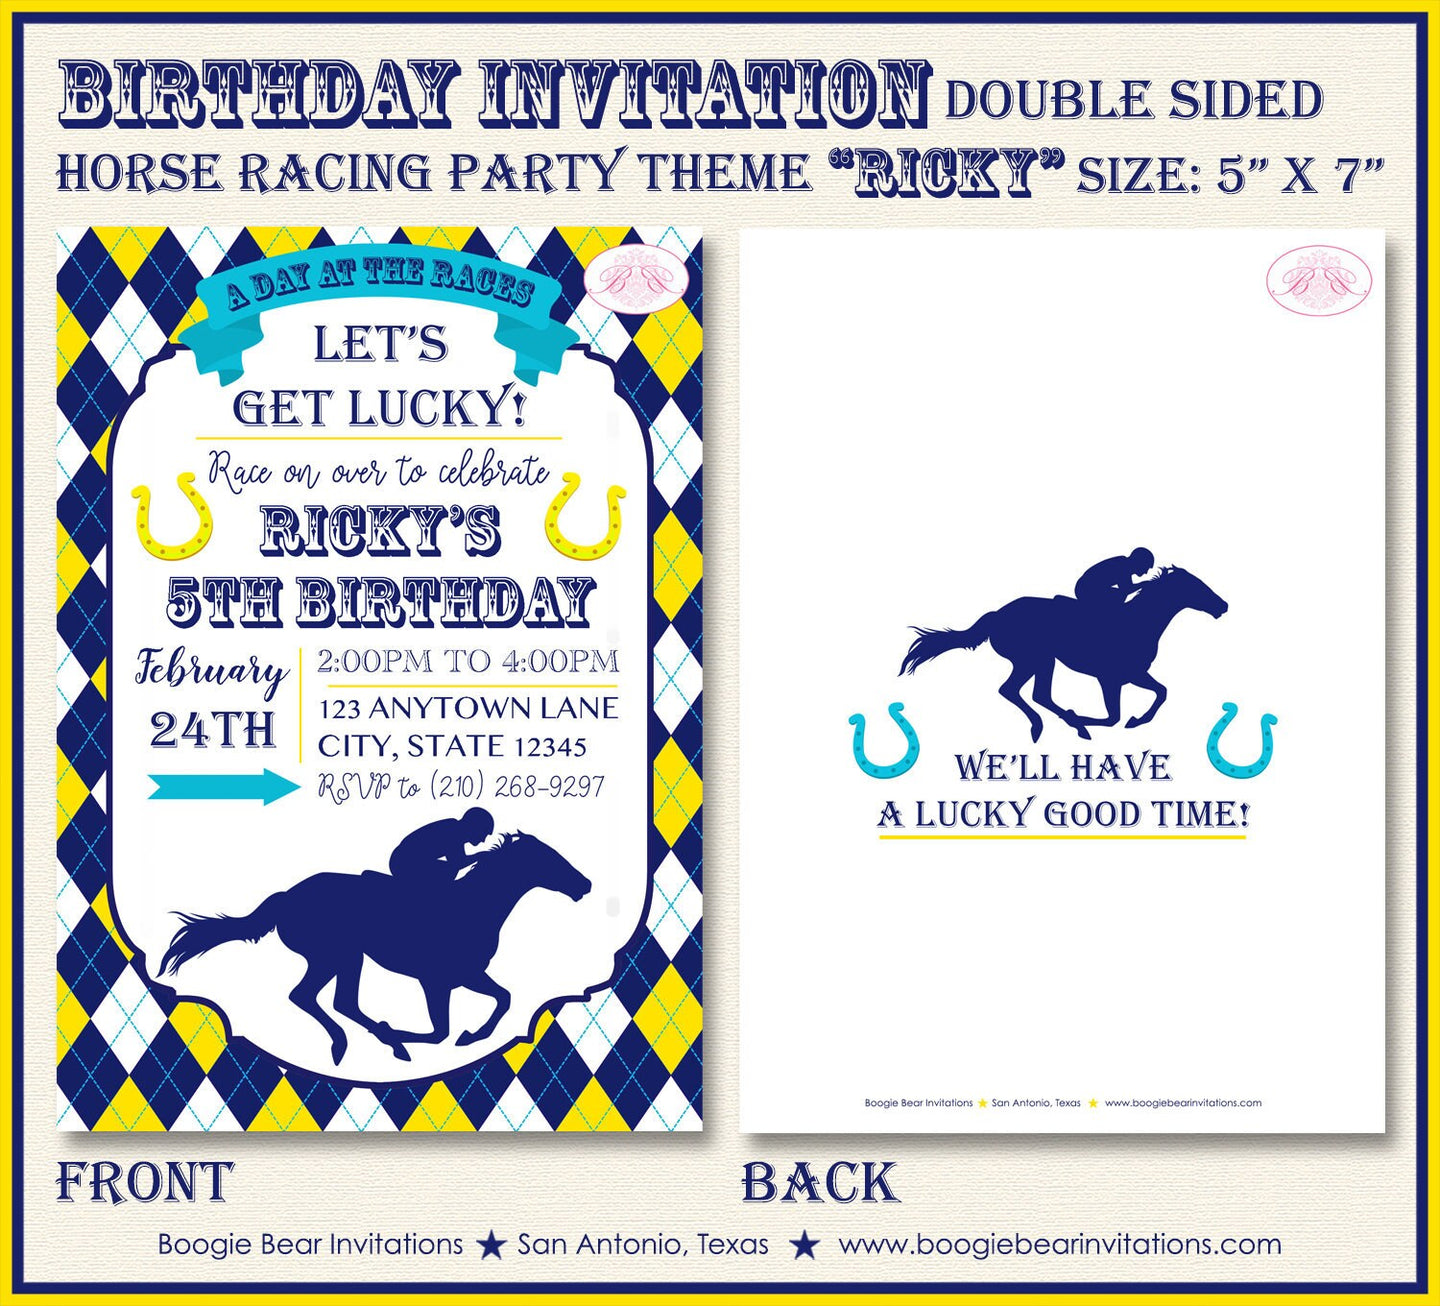 Horse Racing Birthday Party Invitation Orange Blue Kentucky Derby Race Track Boogie Bear Invitations Ricky Theme Paperless Printable Printed